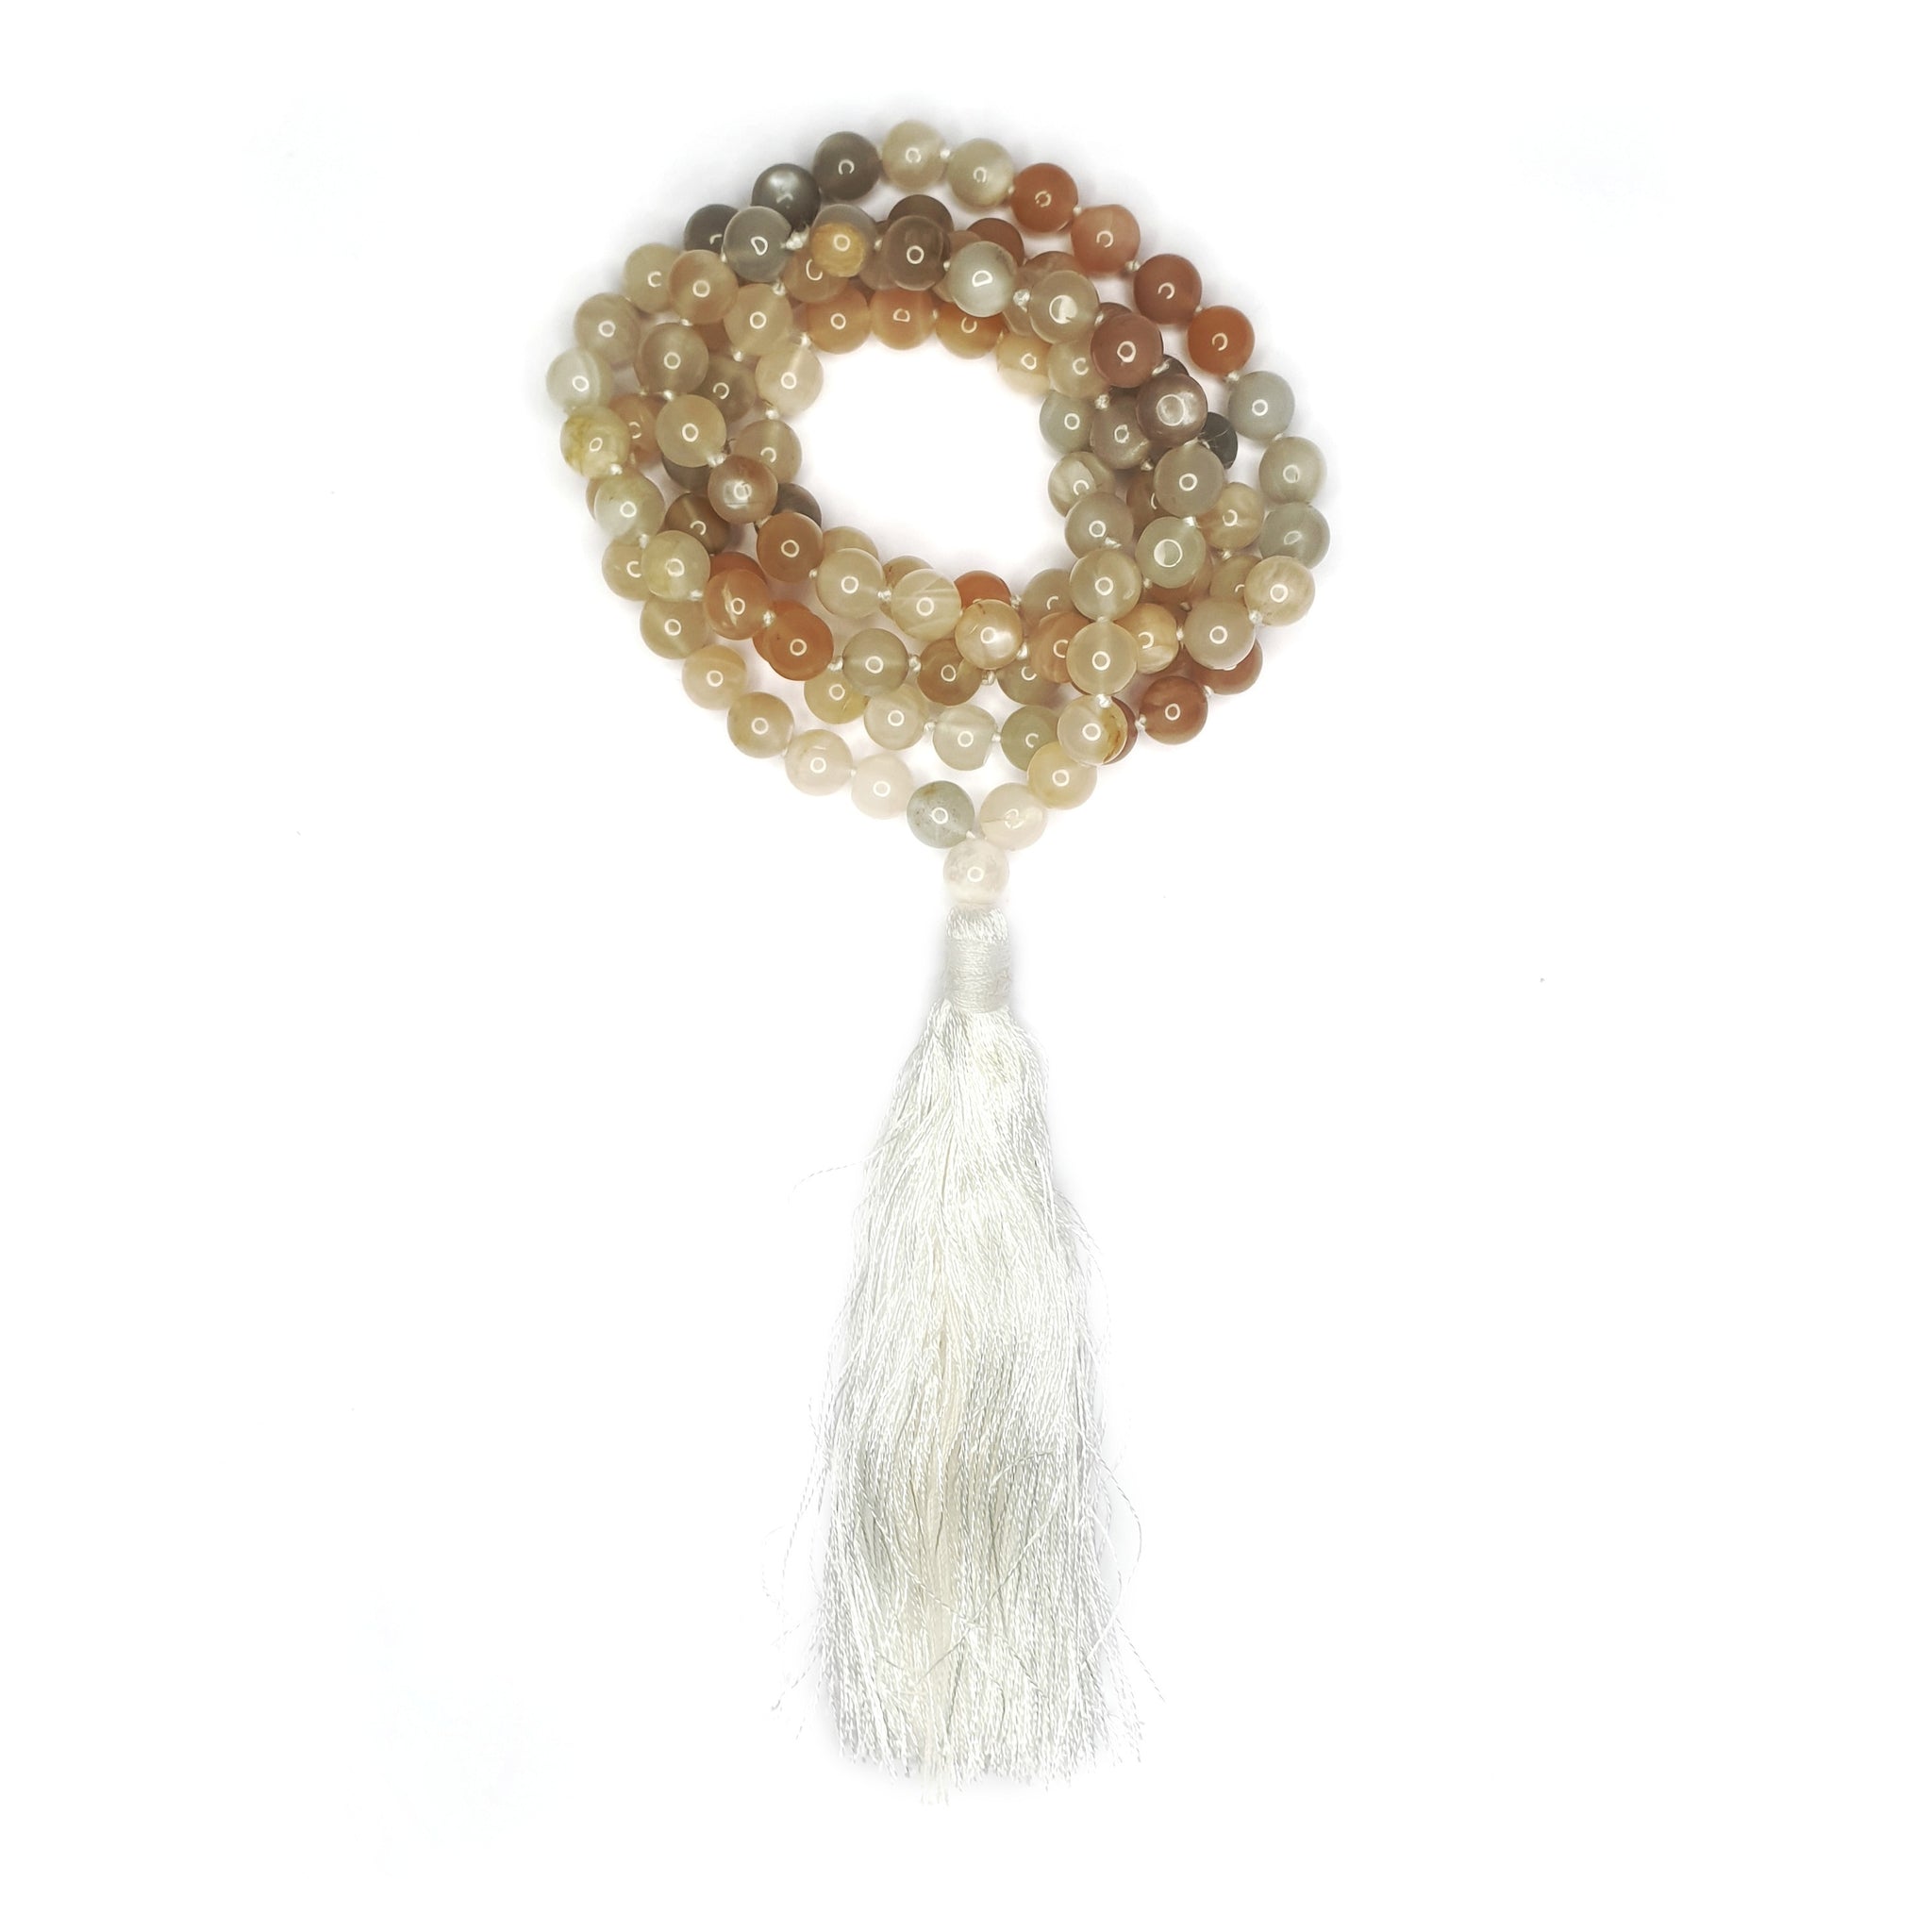 Organic Moonstone Meditation Mala Beads